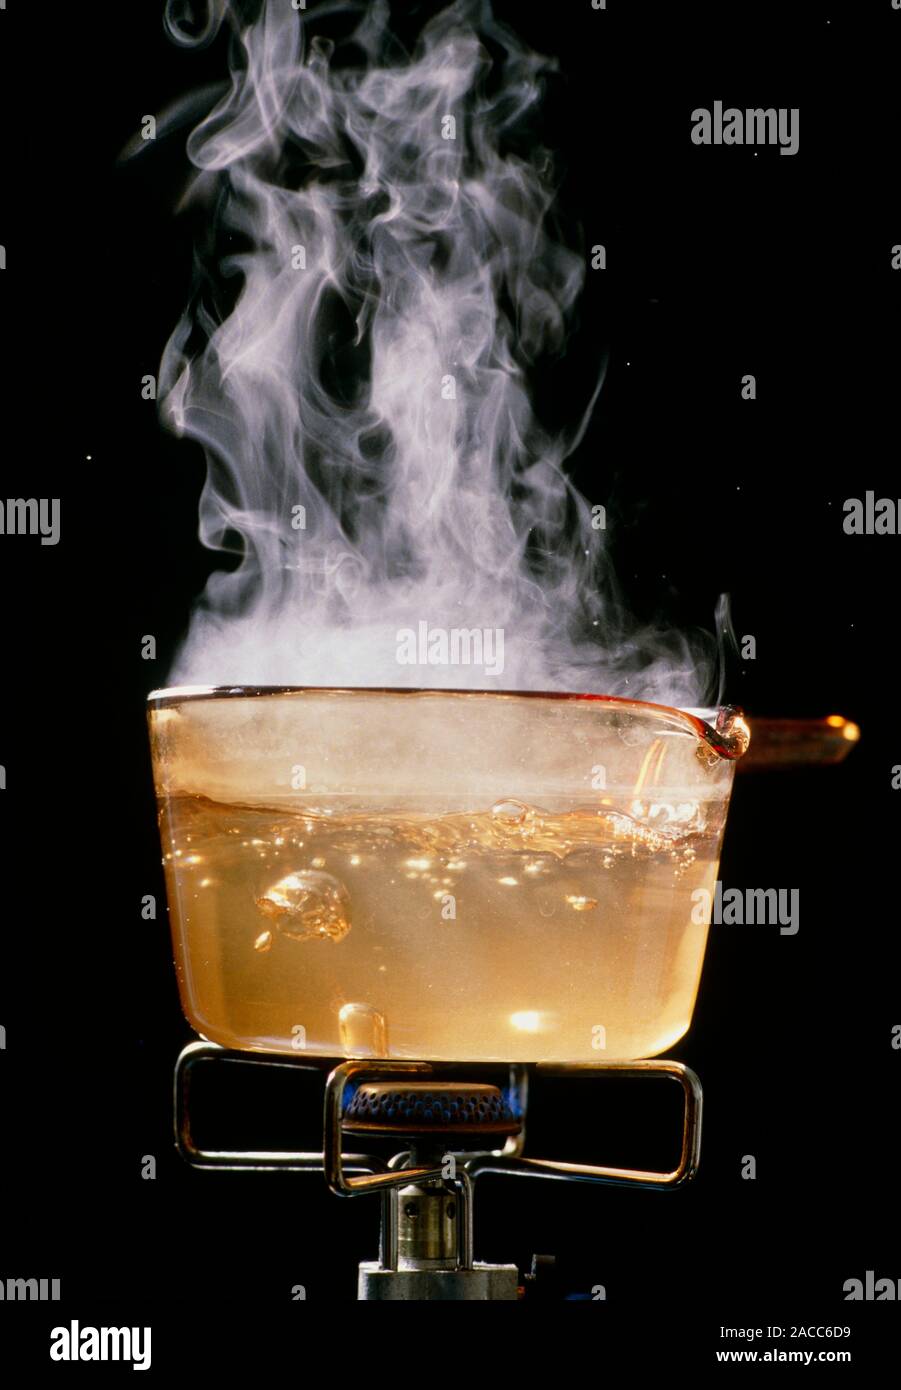 Heat transfer steam condensation фото 40